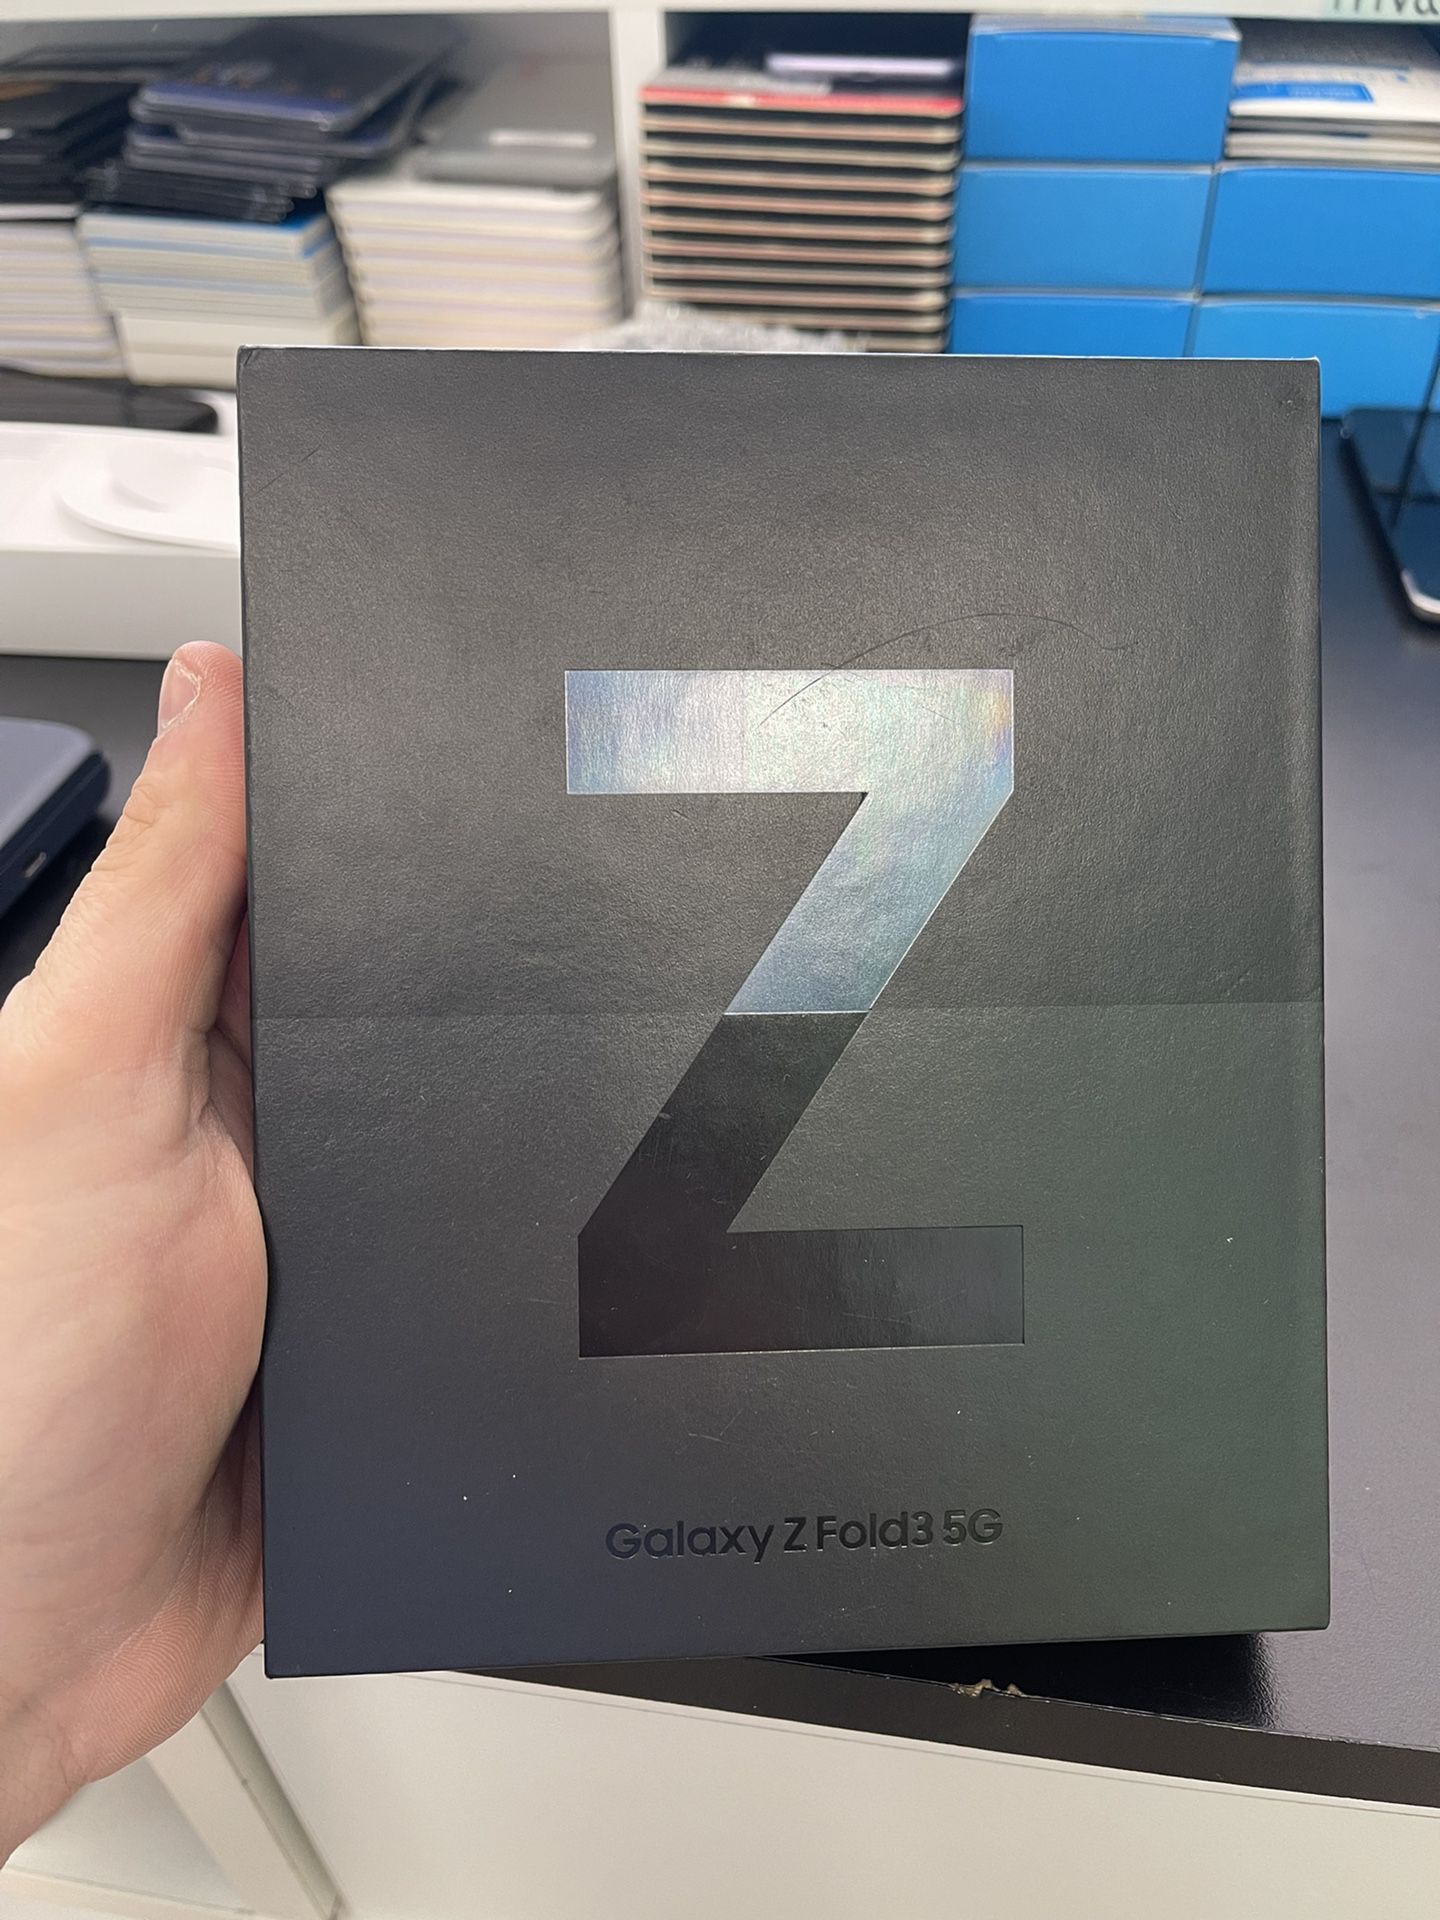 Finance New Samsung Galaxy Z Fold 3 5G 256GB - Only $50 down today!